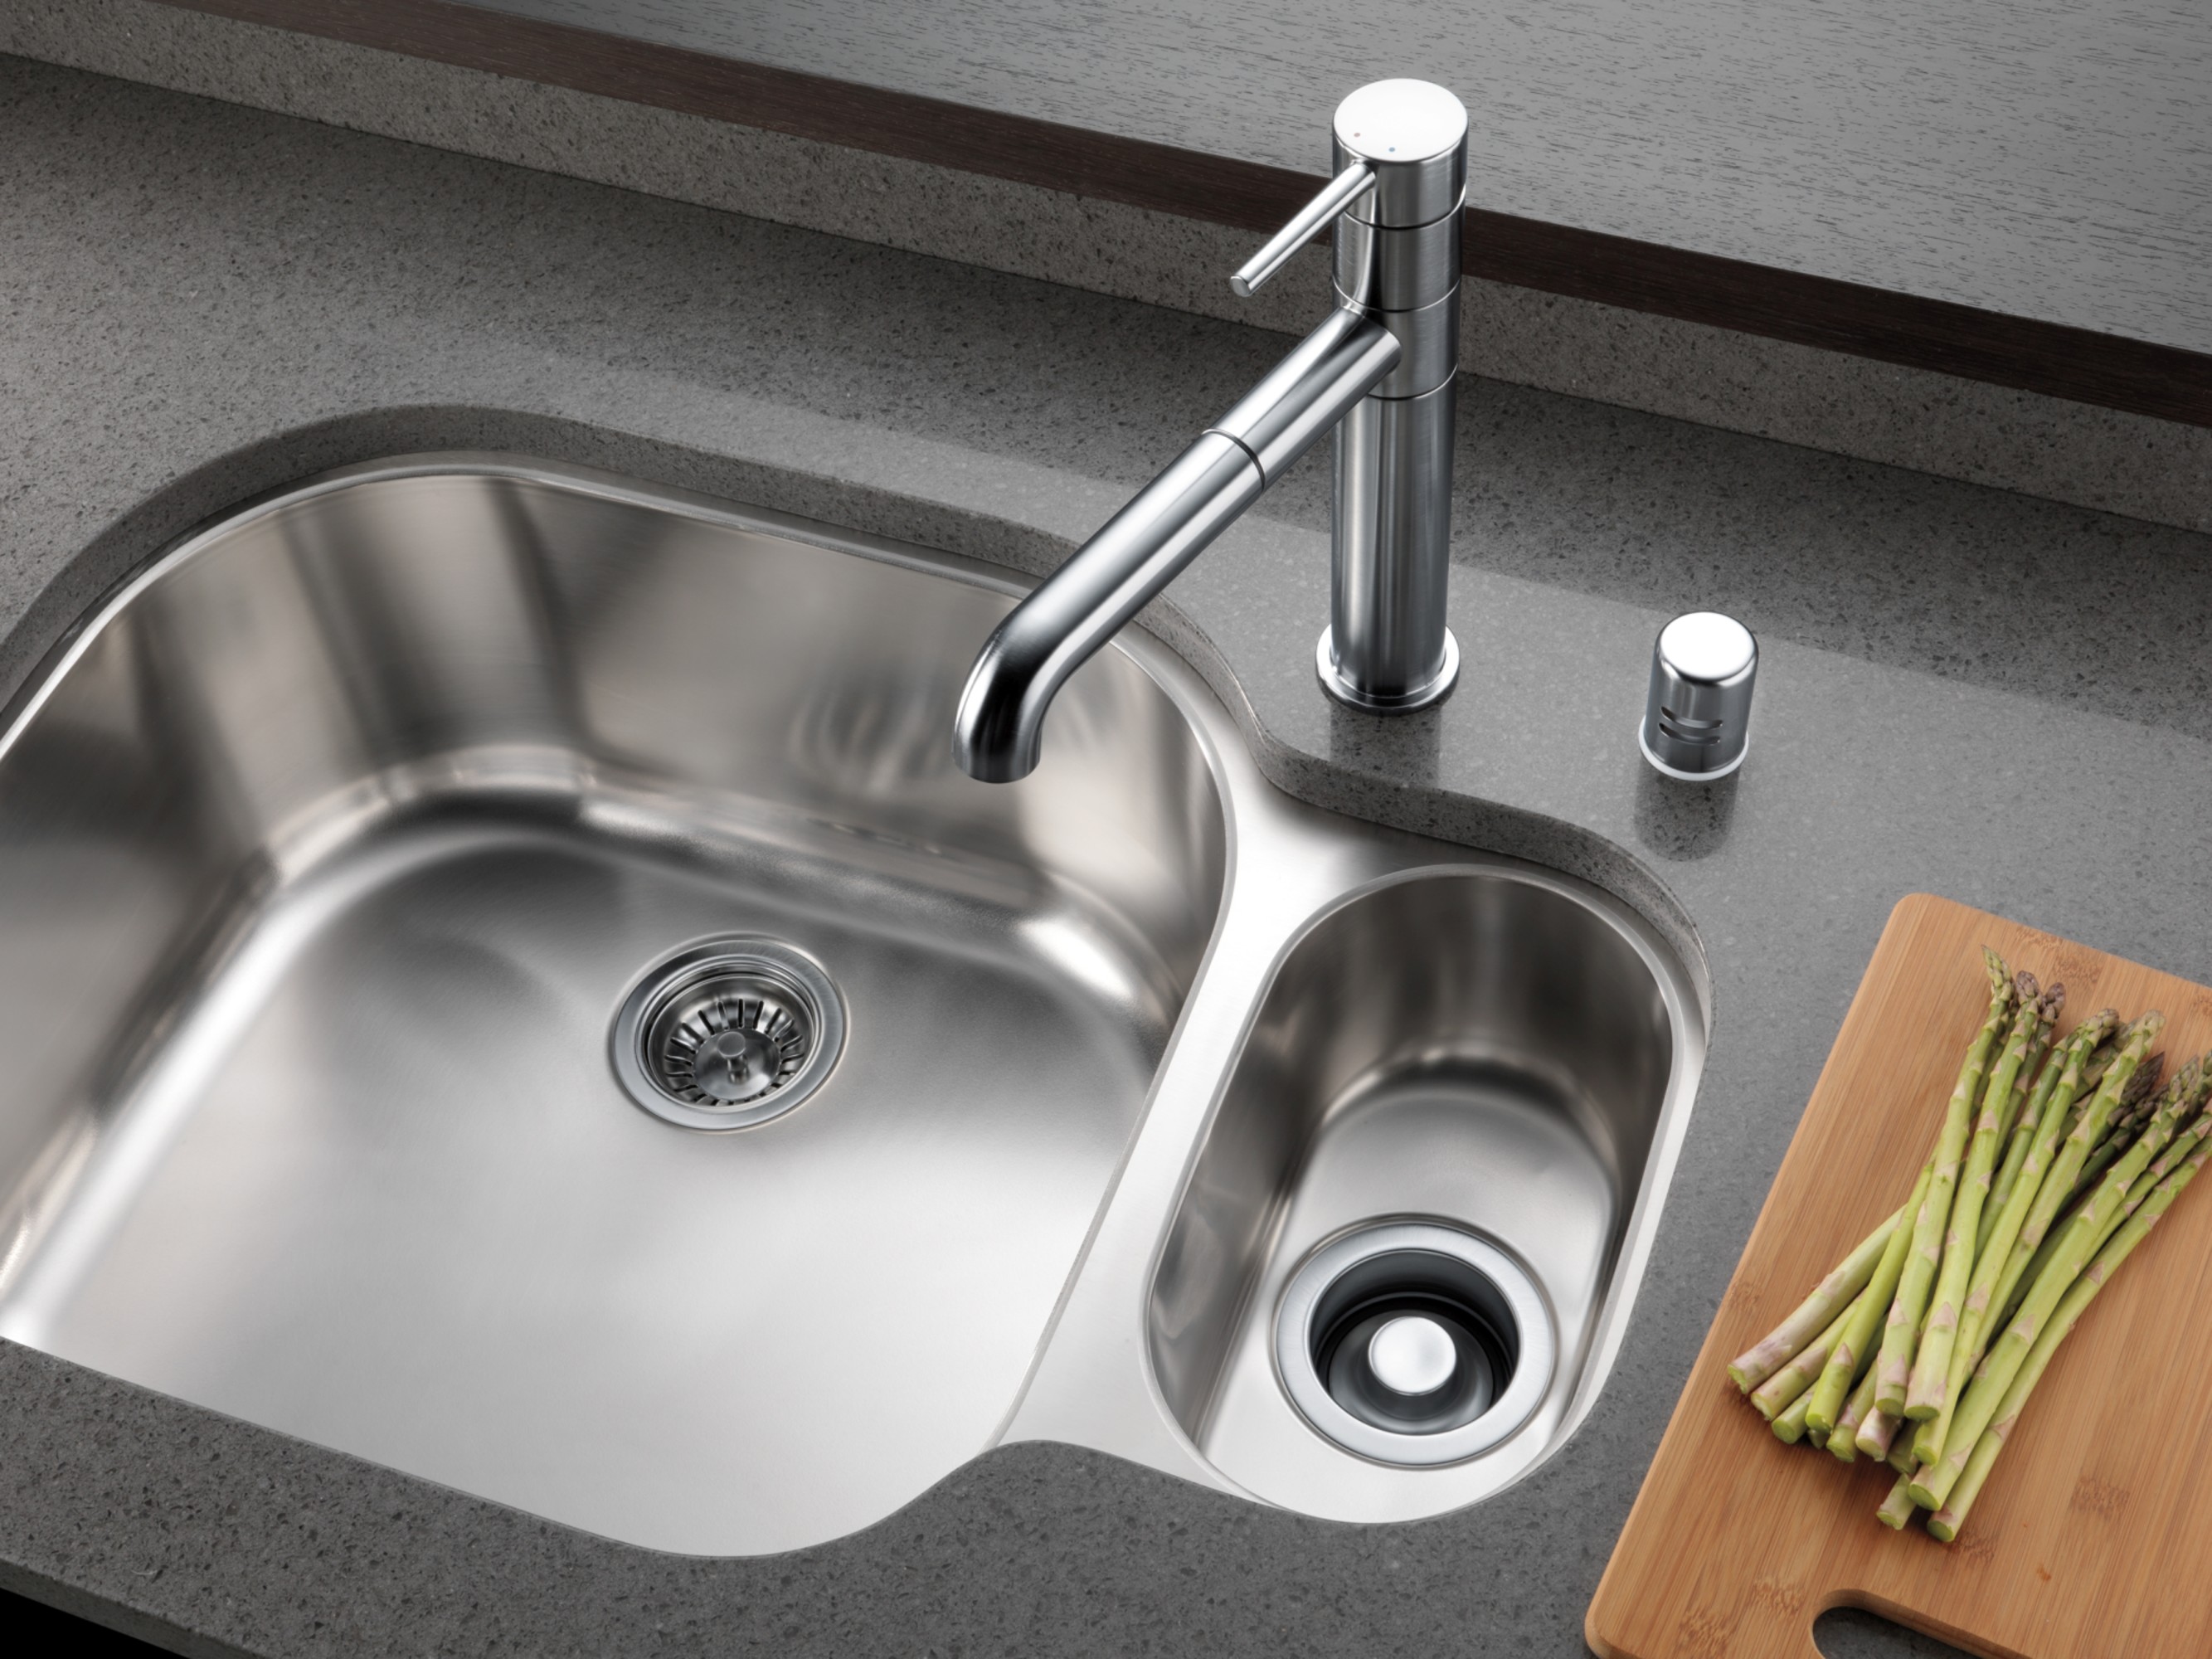 Delta 72010 Basket Strainer Flange For Standard Kitchen Sink Drain Openings - Chrome - image 5 of 7